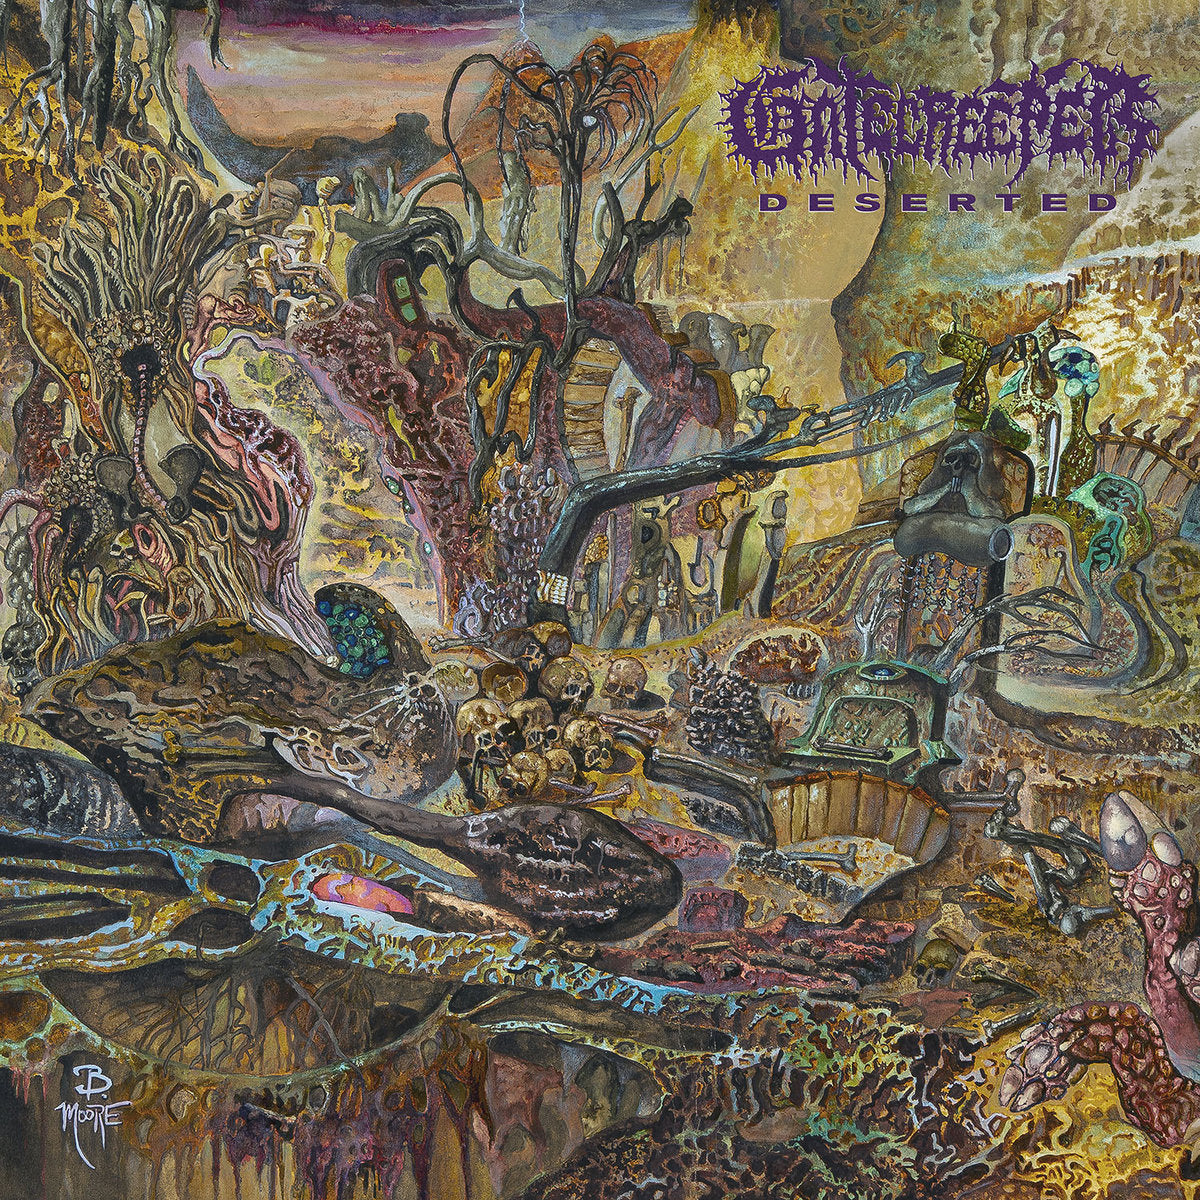 GATECREEPER - Deserted - LP - Limited Neon Violet with Splatter Vinyl